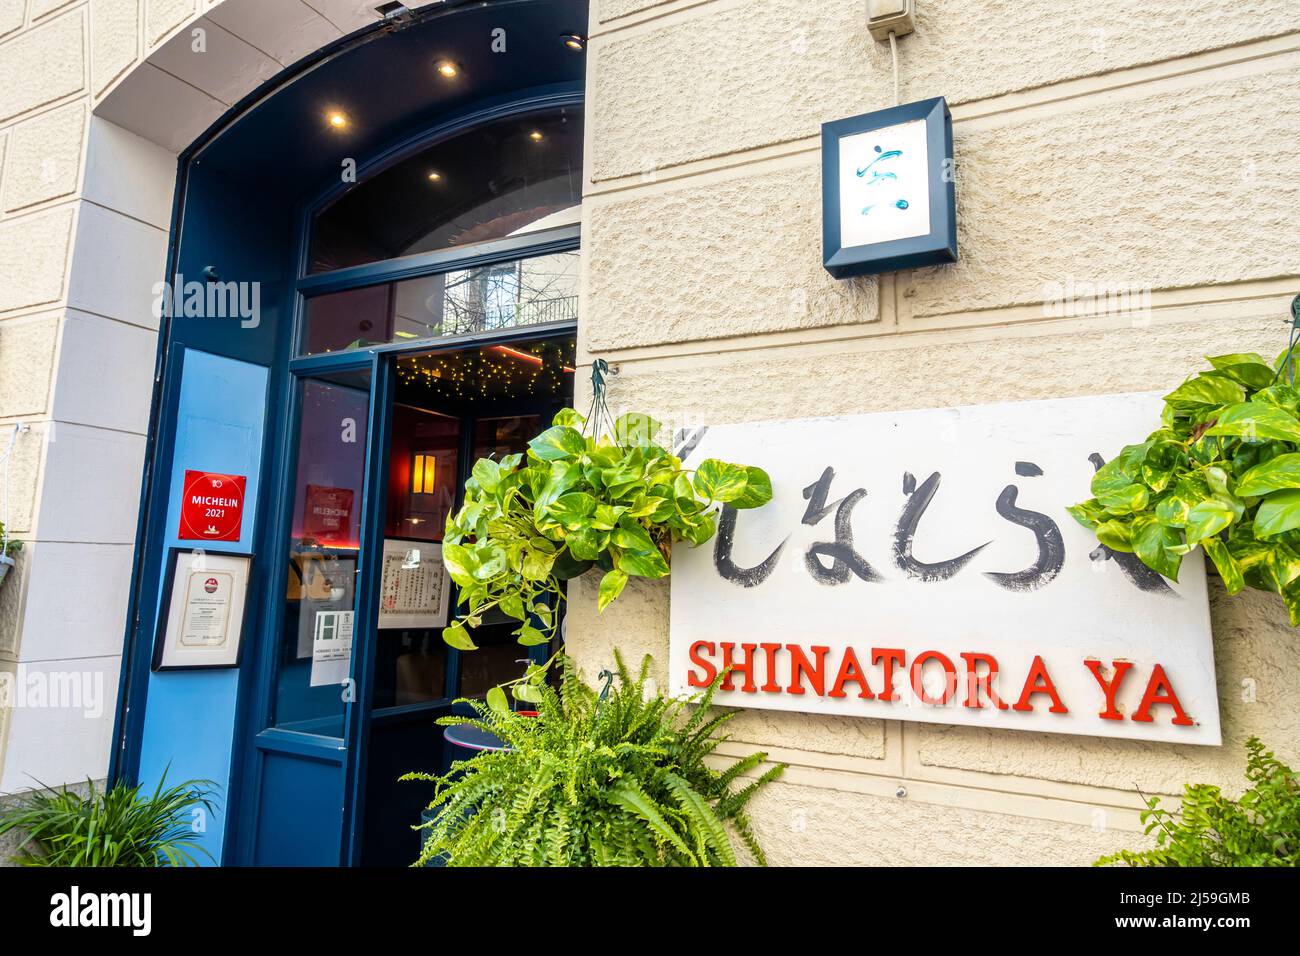 Restaurant Shinatora Ya offering Japanese cuisine. Madrid, Spain. Theme - Michelin guide restaurants. Stock Photo